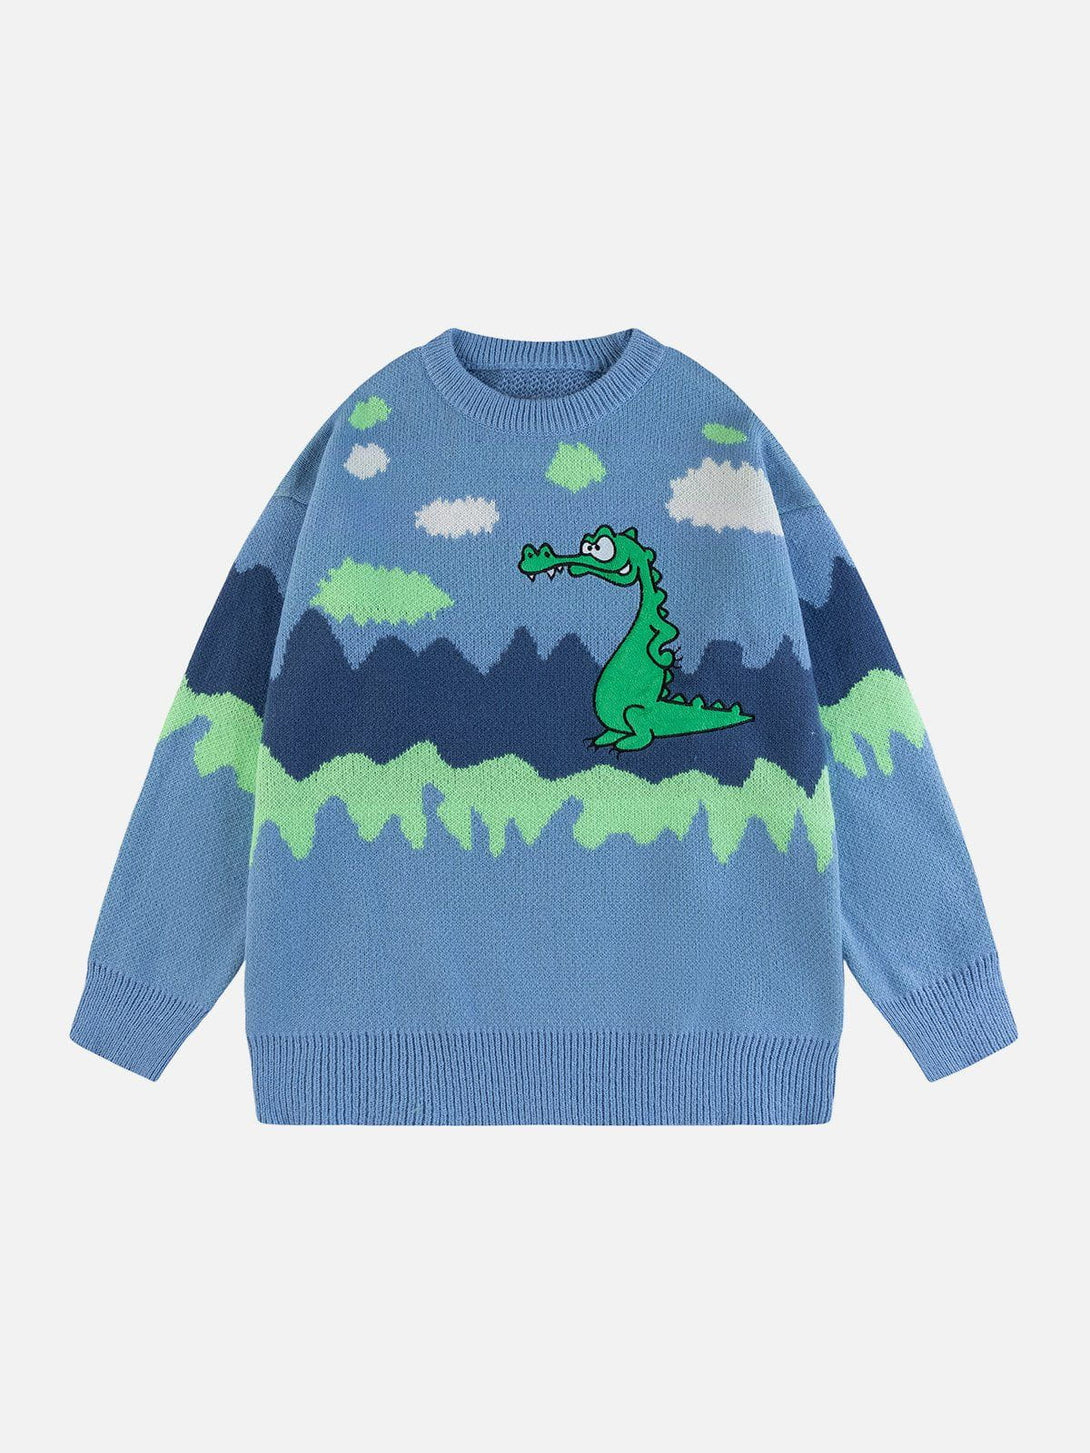 Majesda® - Patchwork Fun Dinosaur Sweater outfit ideas streetwear fashion